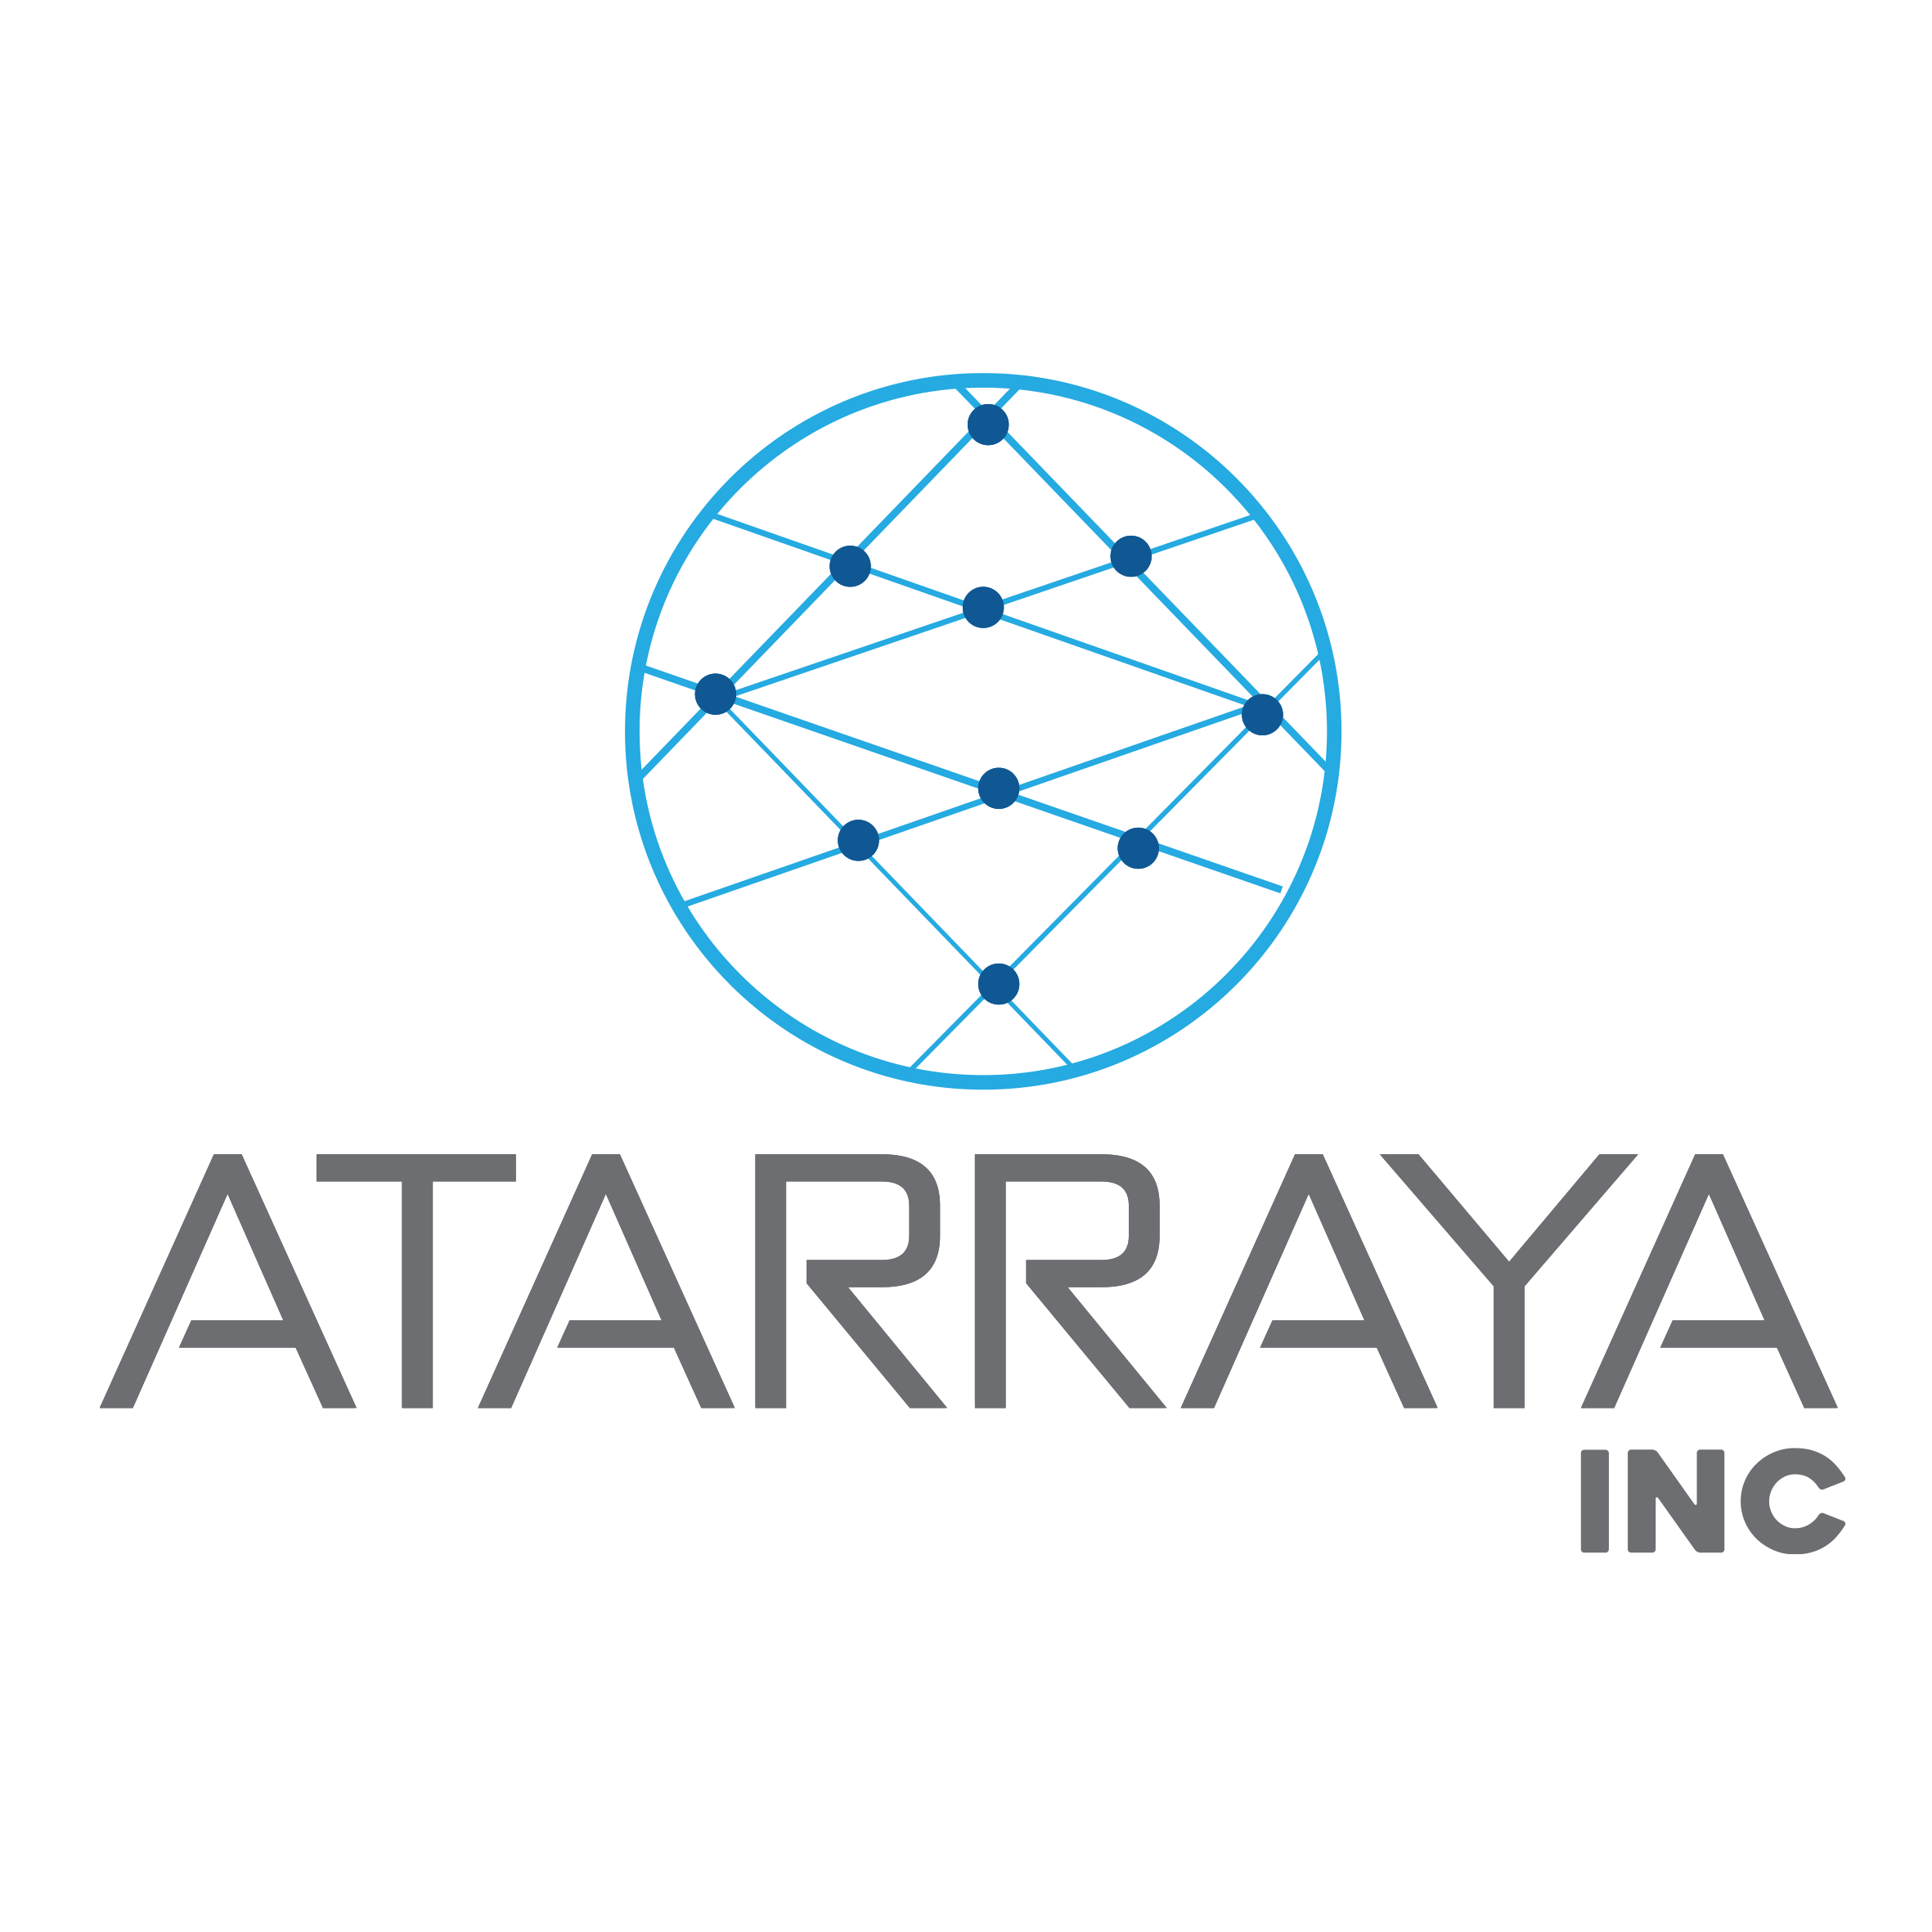 Atarraya, creator of Shrimpbox, the first sustainable ‘plug-and-play’ shrimp farming technology